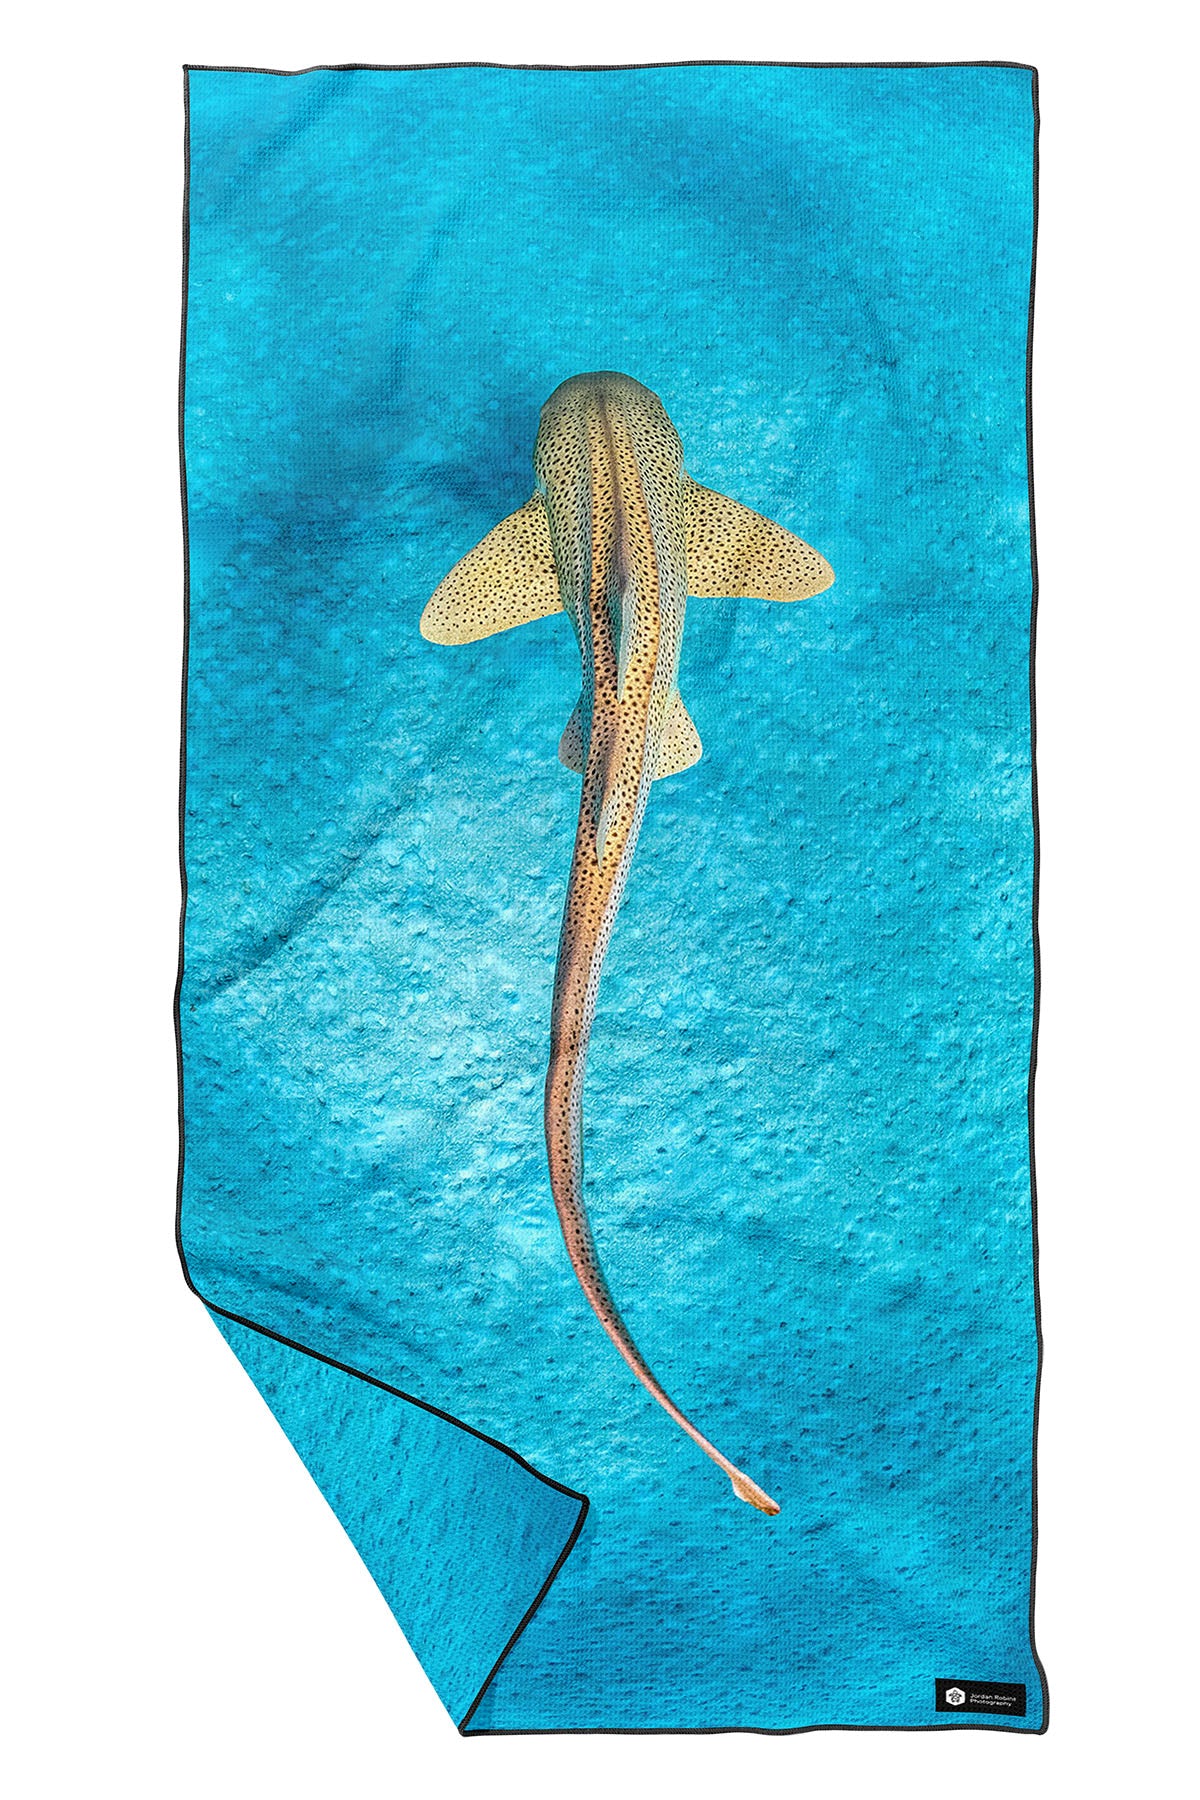 Leopard Shark Ningaloo Reef - Beach Towel